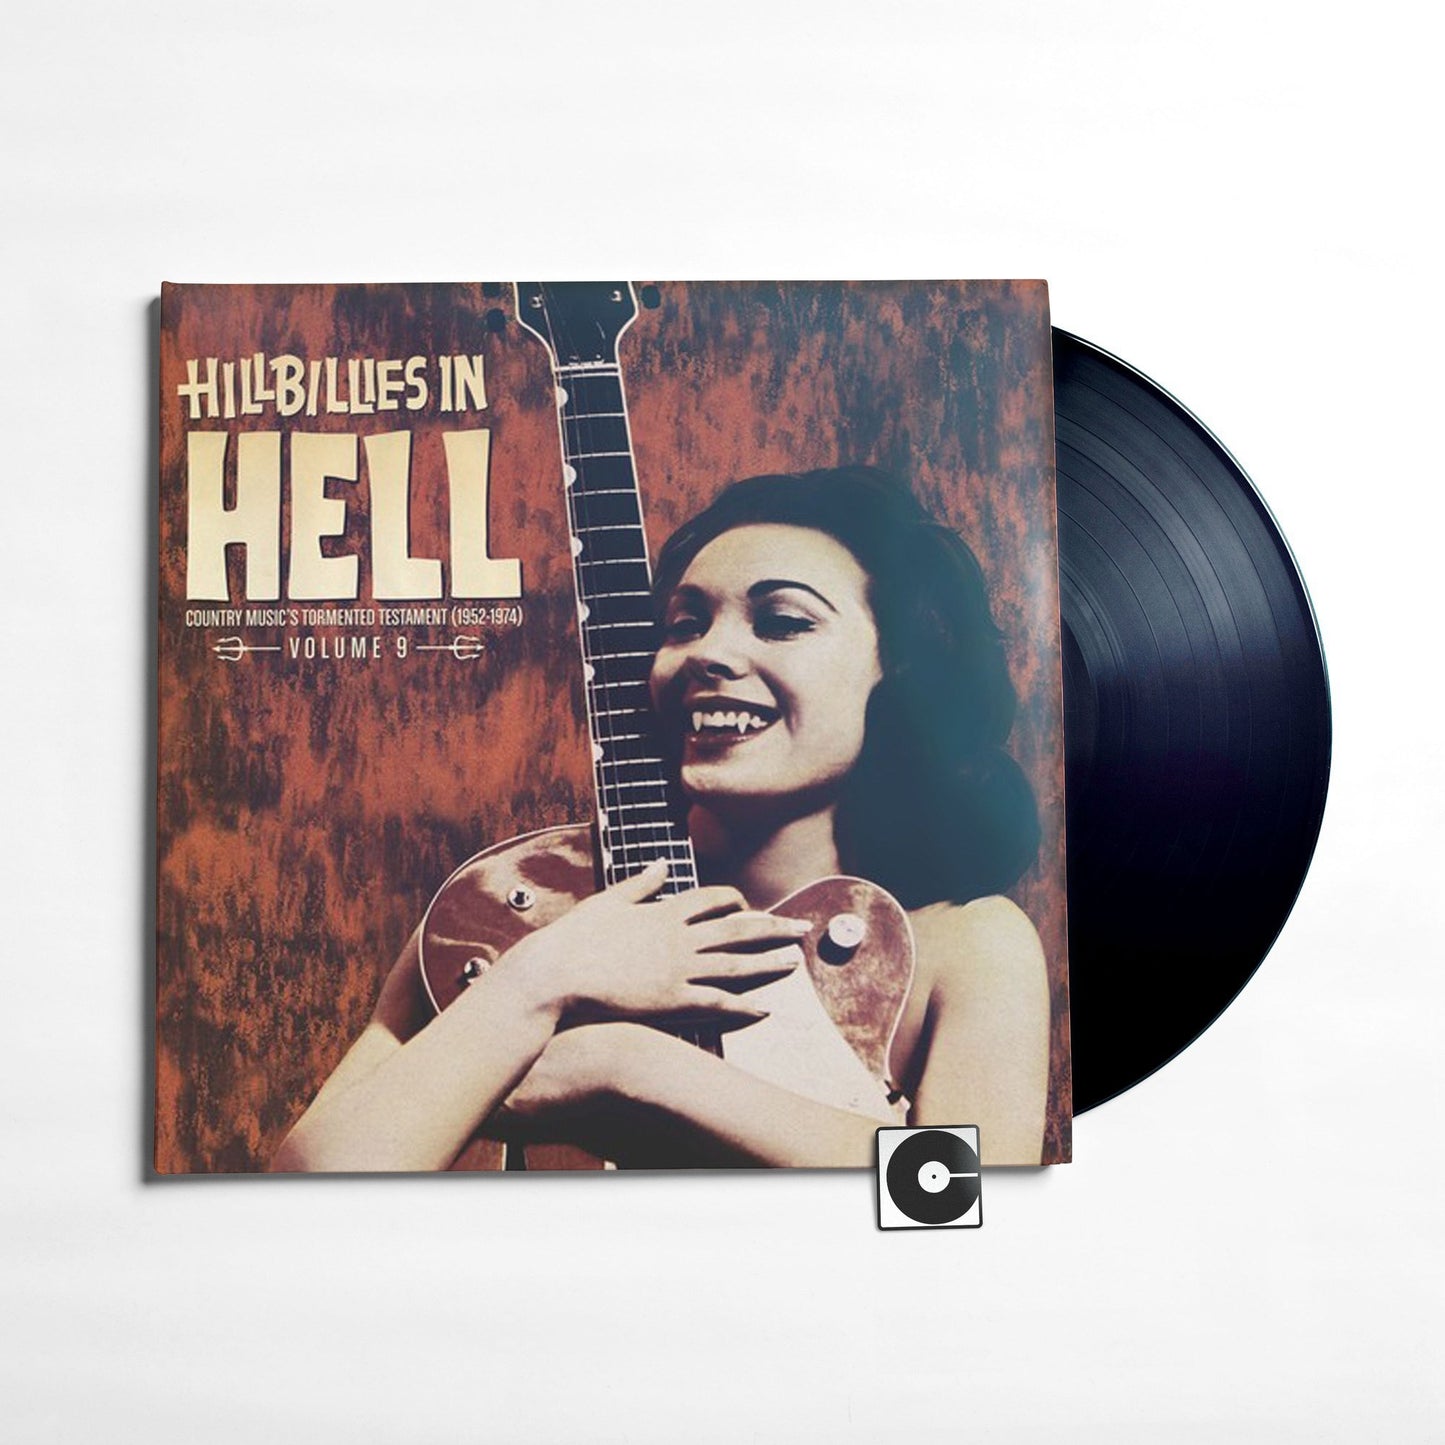 Various Artists - "Hillbillies In Hell Vol 9"